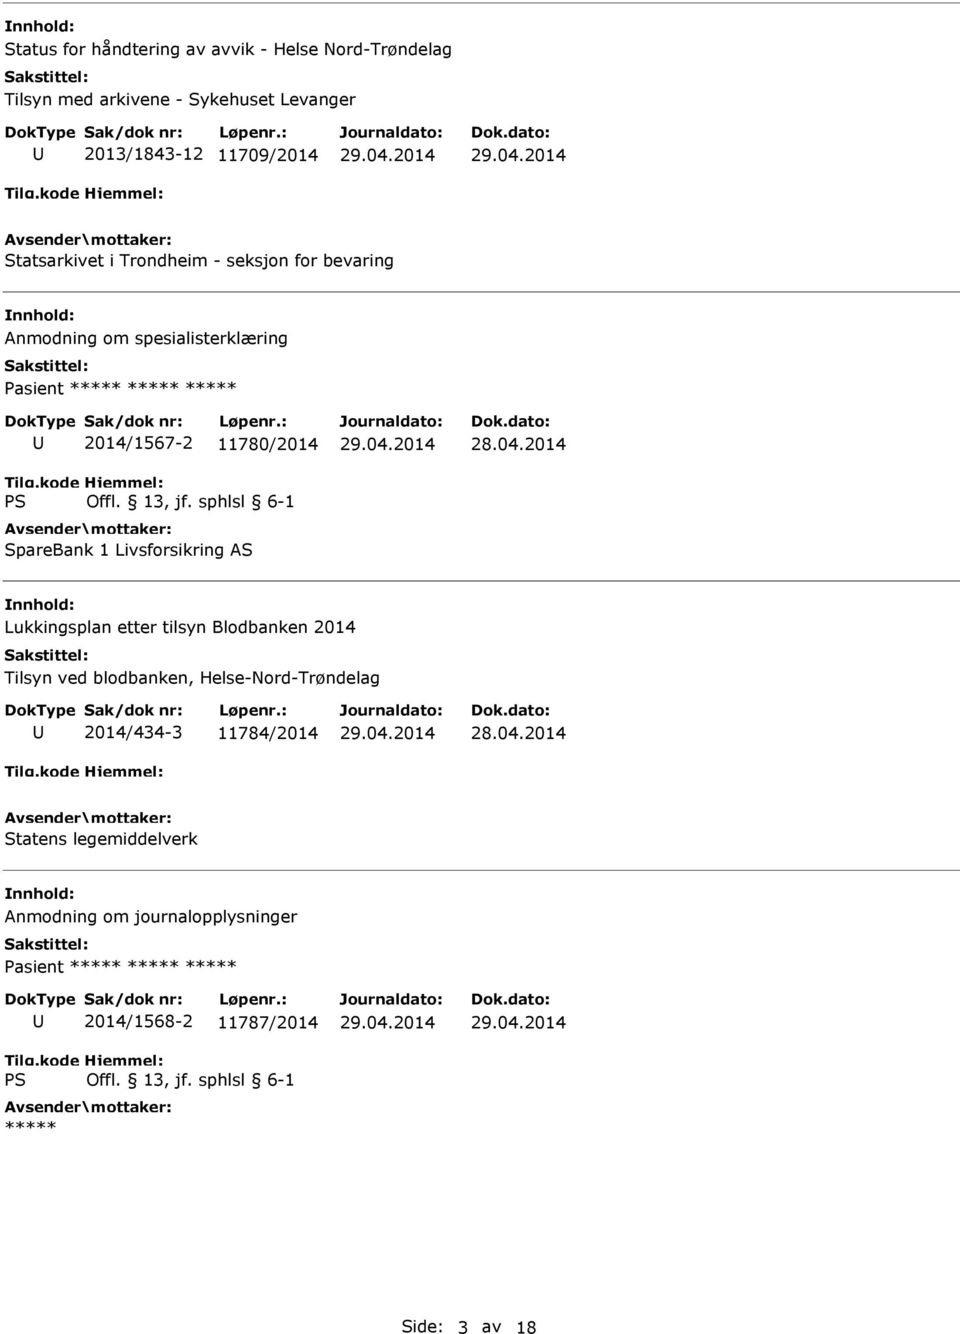 11780/2014 SpareBank 1 Livsforsikring AS Lukkingsplan etter tilsyn Blodbanken 2014 Tilsyn ved blodbanken, Helse-Nord-Trøndelag